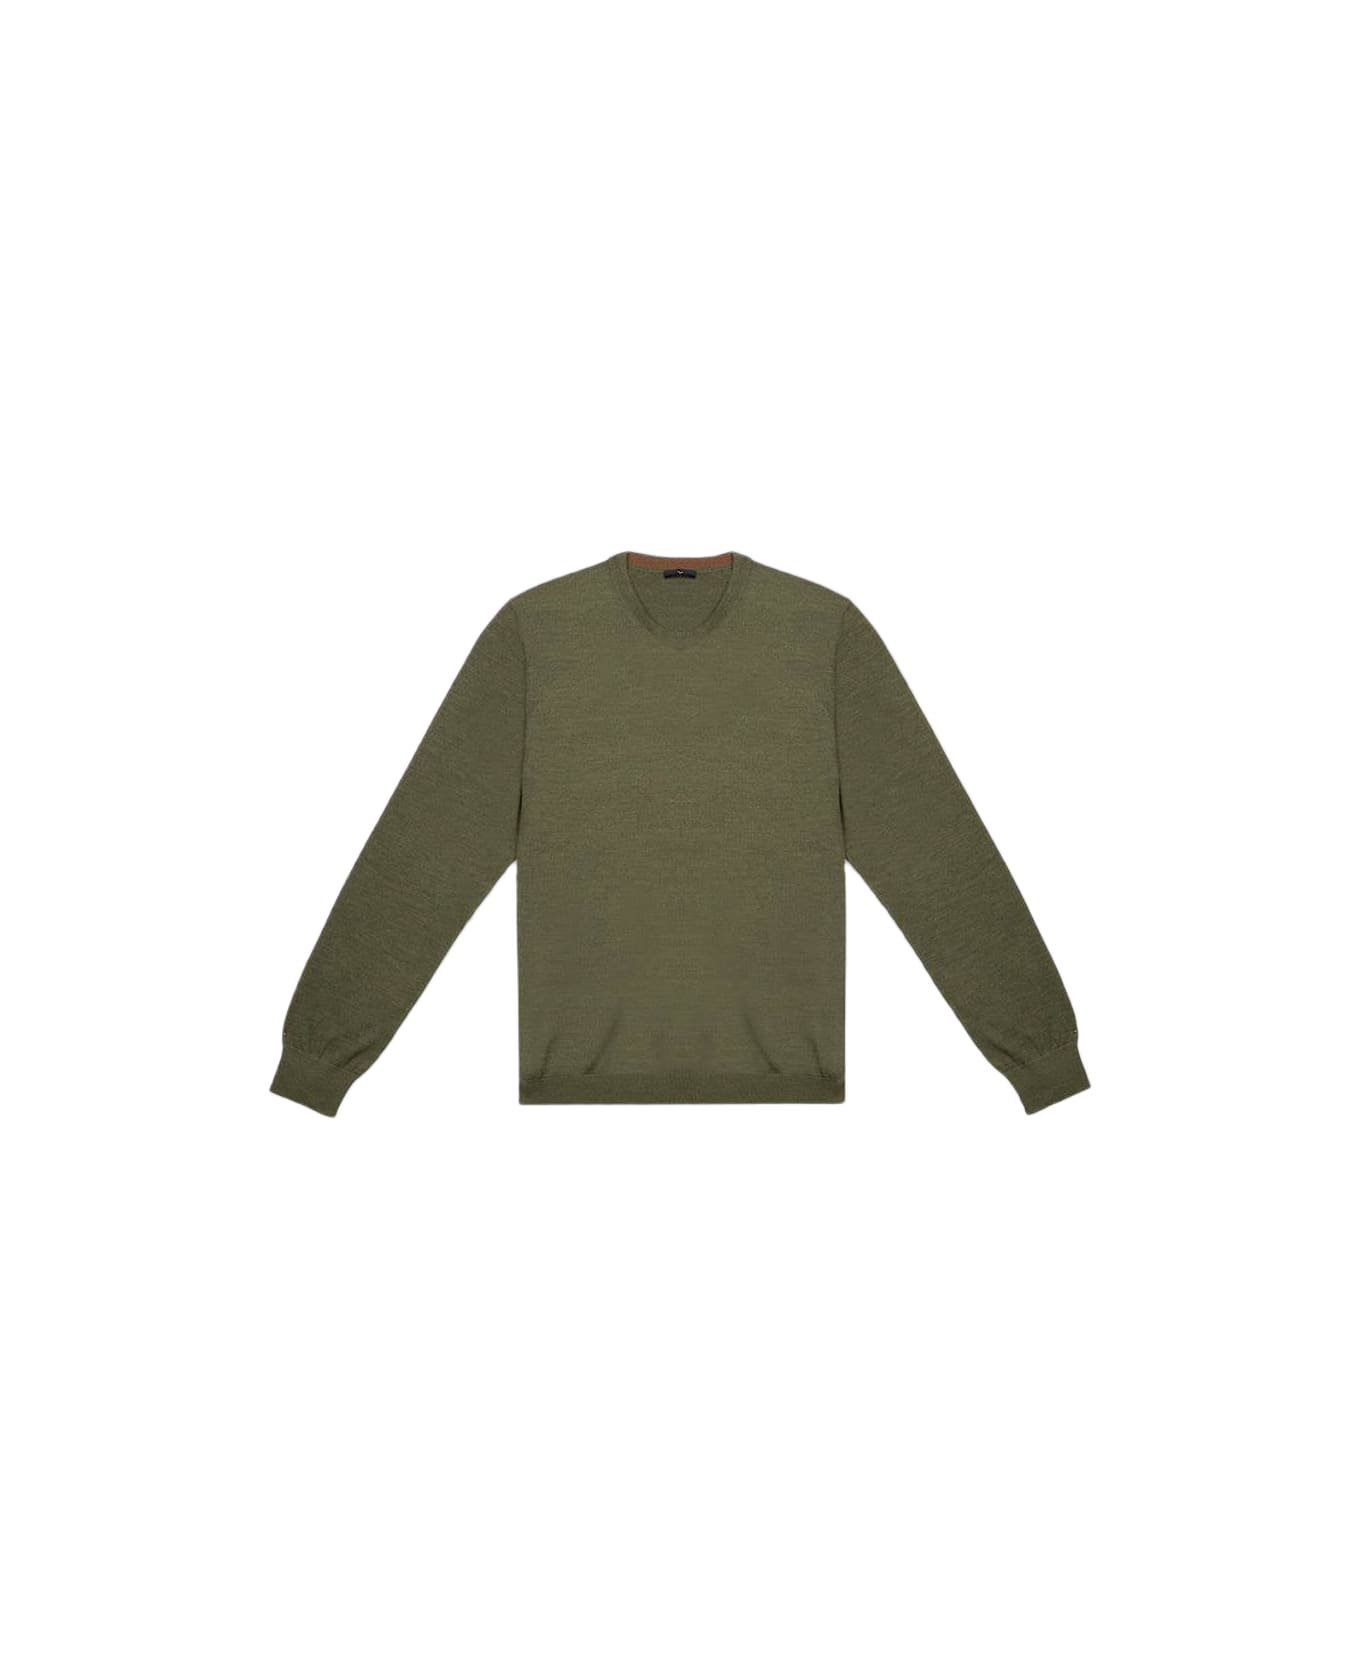 Larusmiani Crew Neck Sweater Sweater - Olive